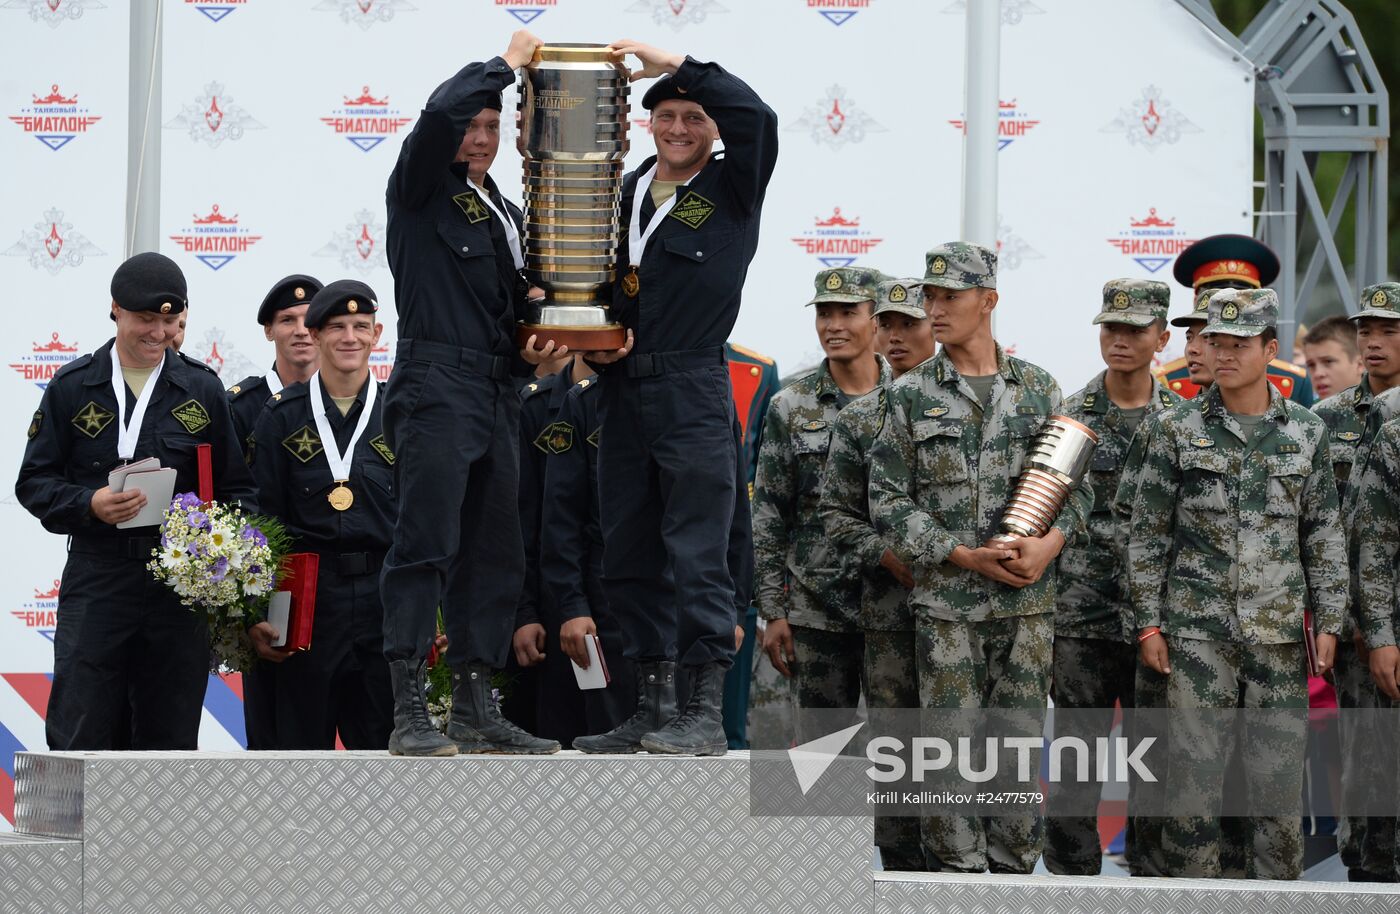 Tank Biathlon 2014 wraps up